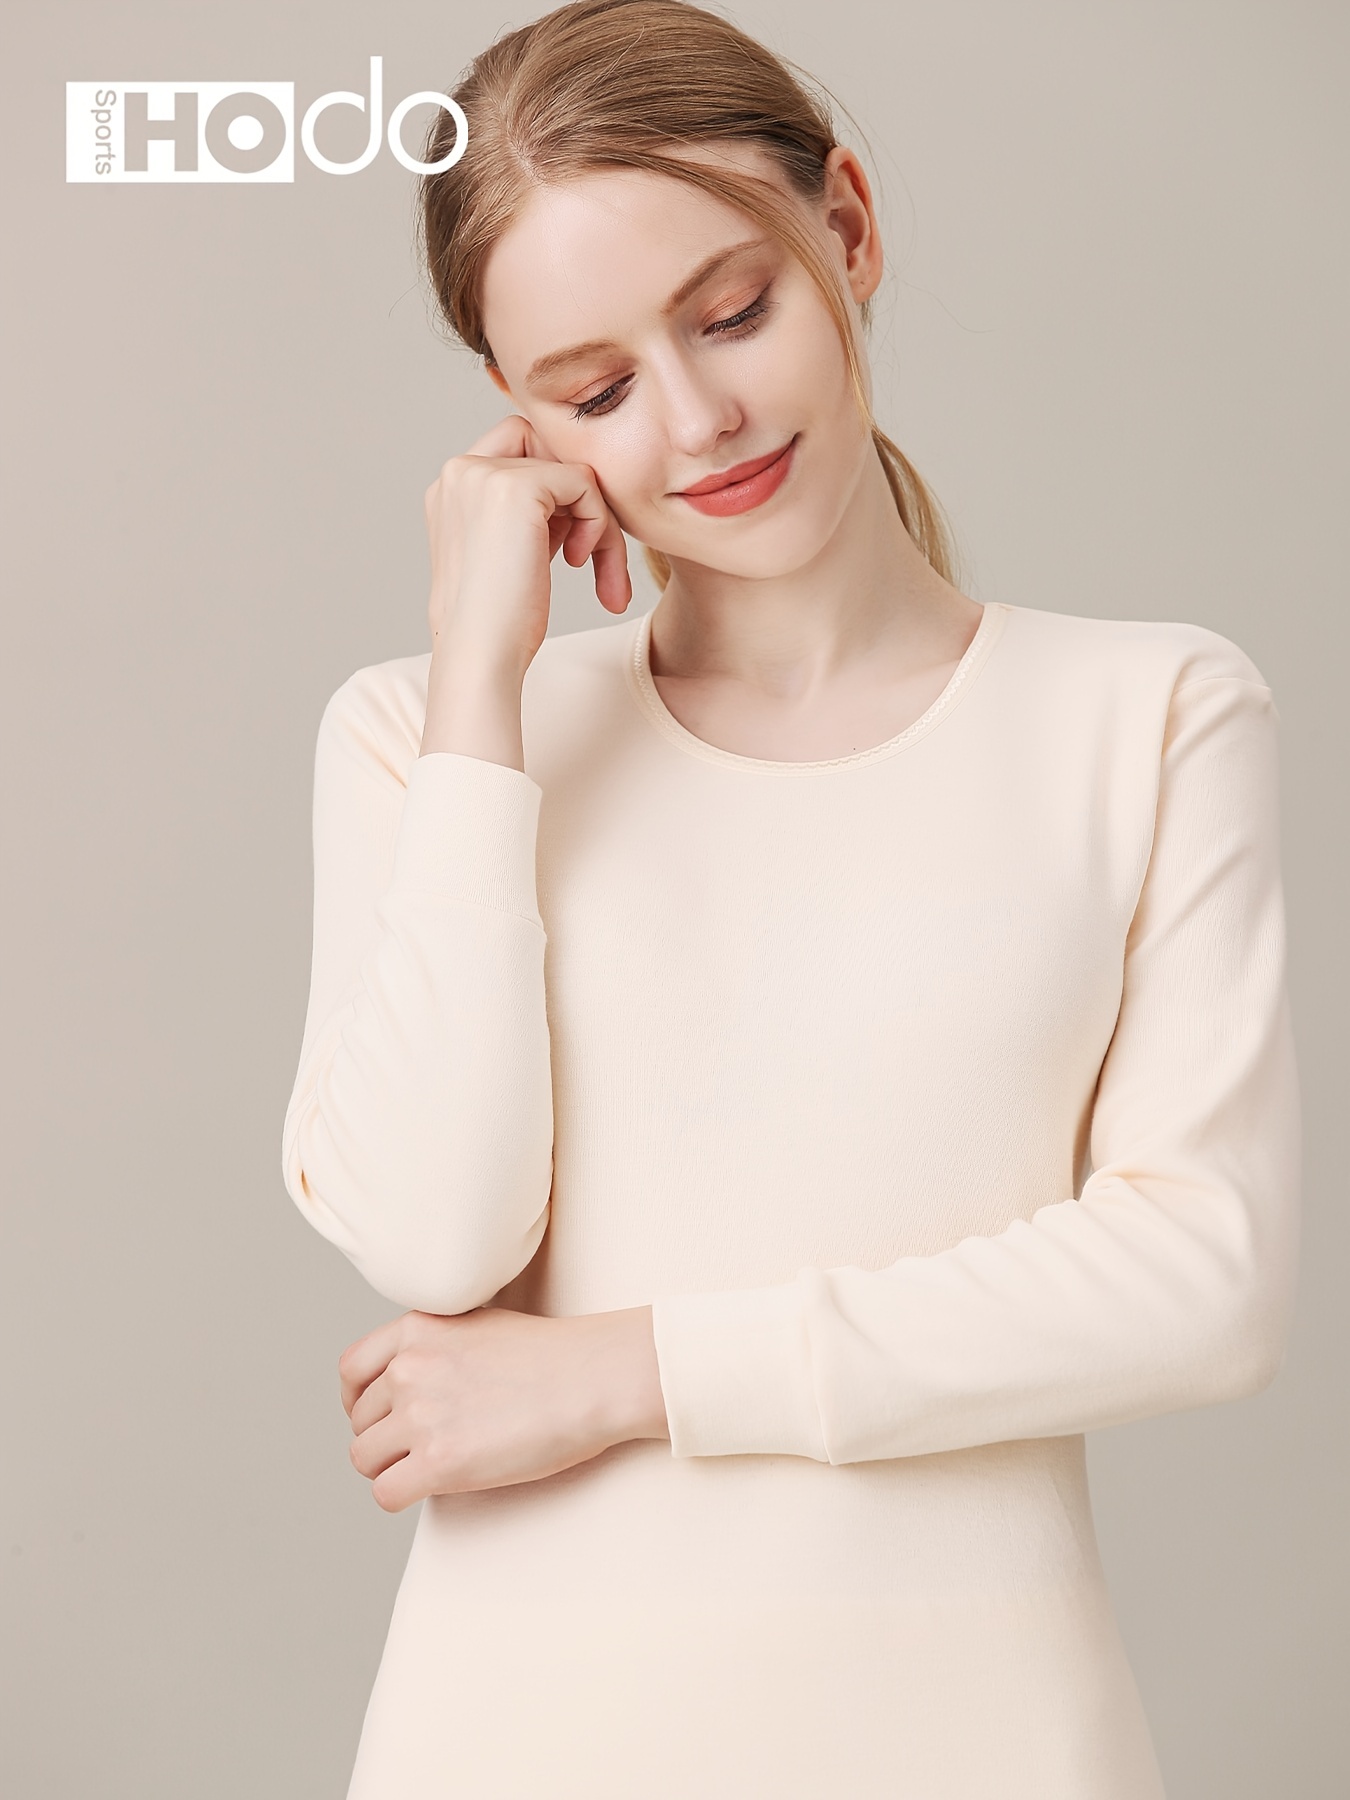 WuHou Women's 100% Cotton Thermal Underwear Two Piece Long Johns Set-2XL- White at  Women's Clothing store